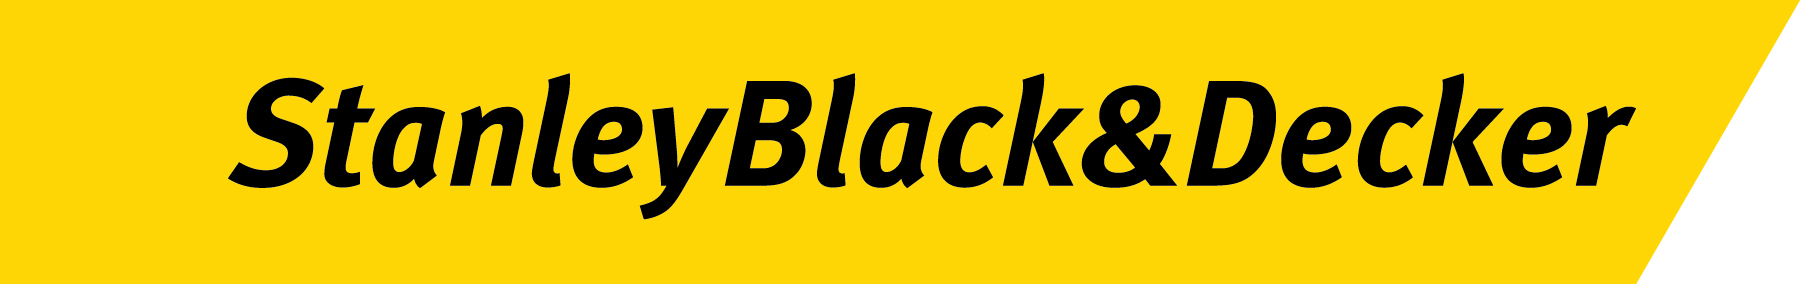 SBD_Yellow_logo